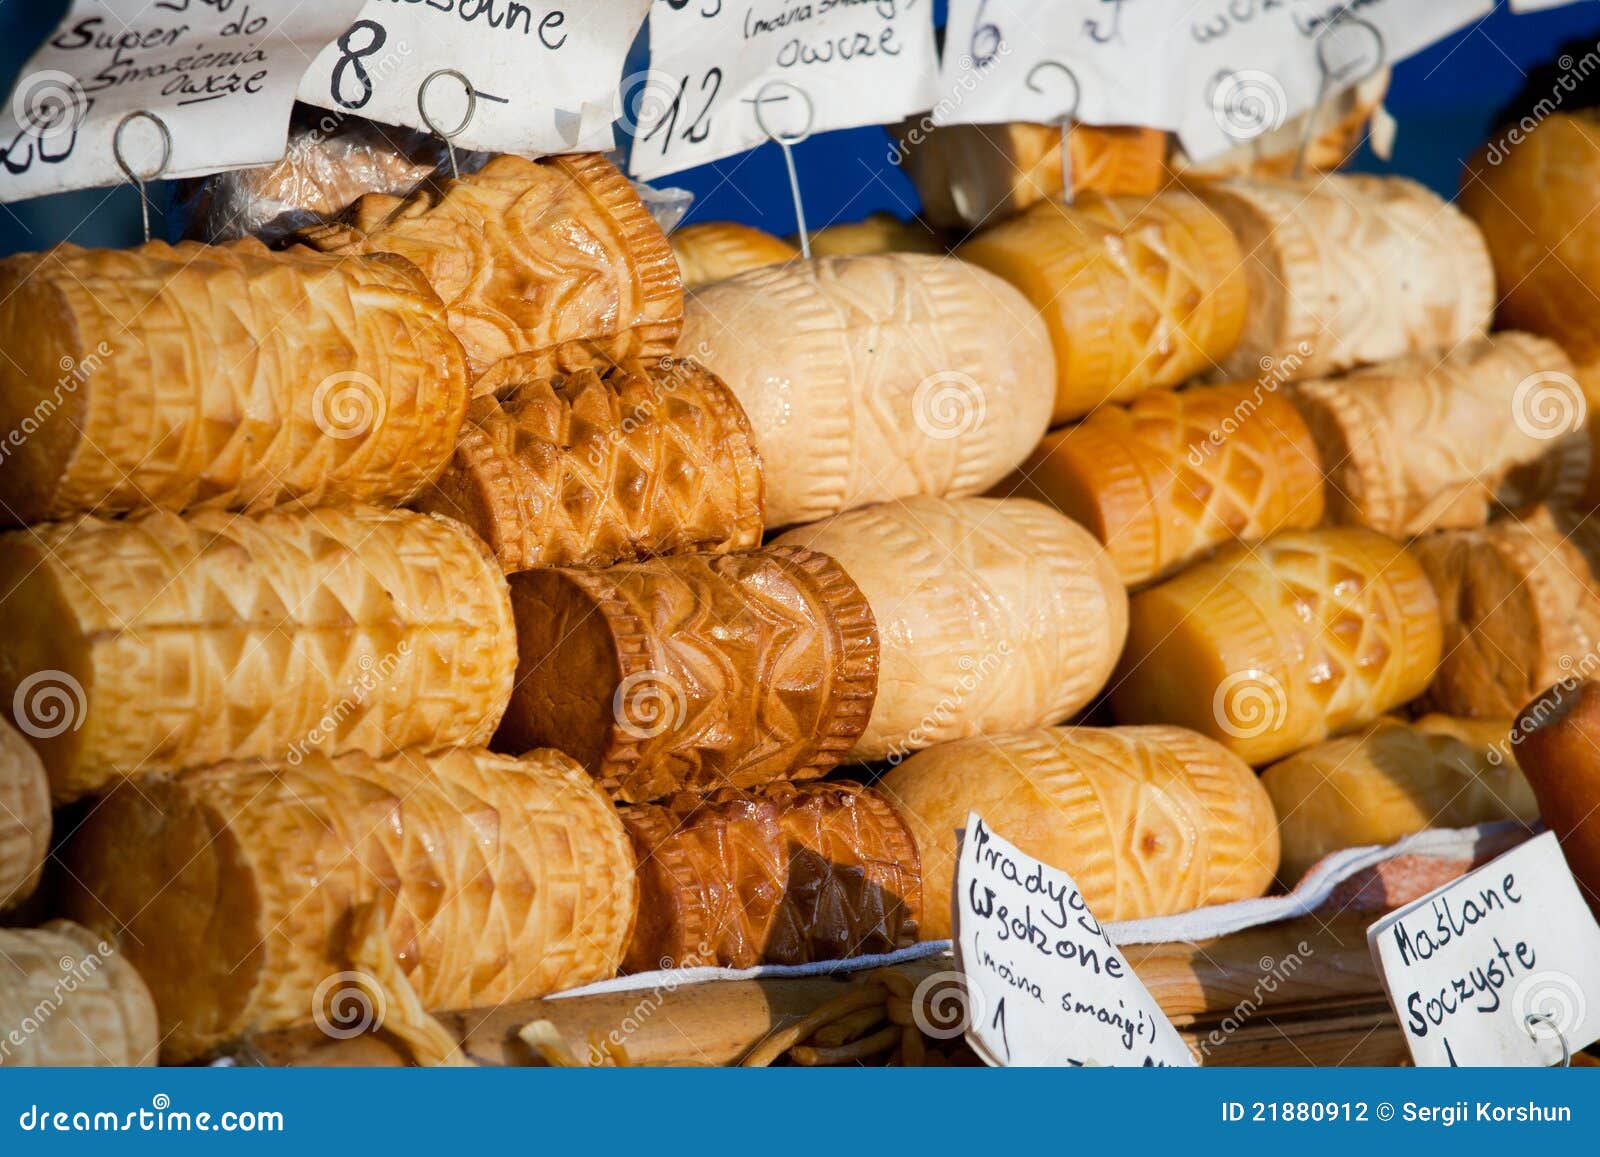 smoked cheese oscypki on the market in zakopane